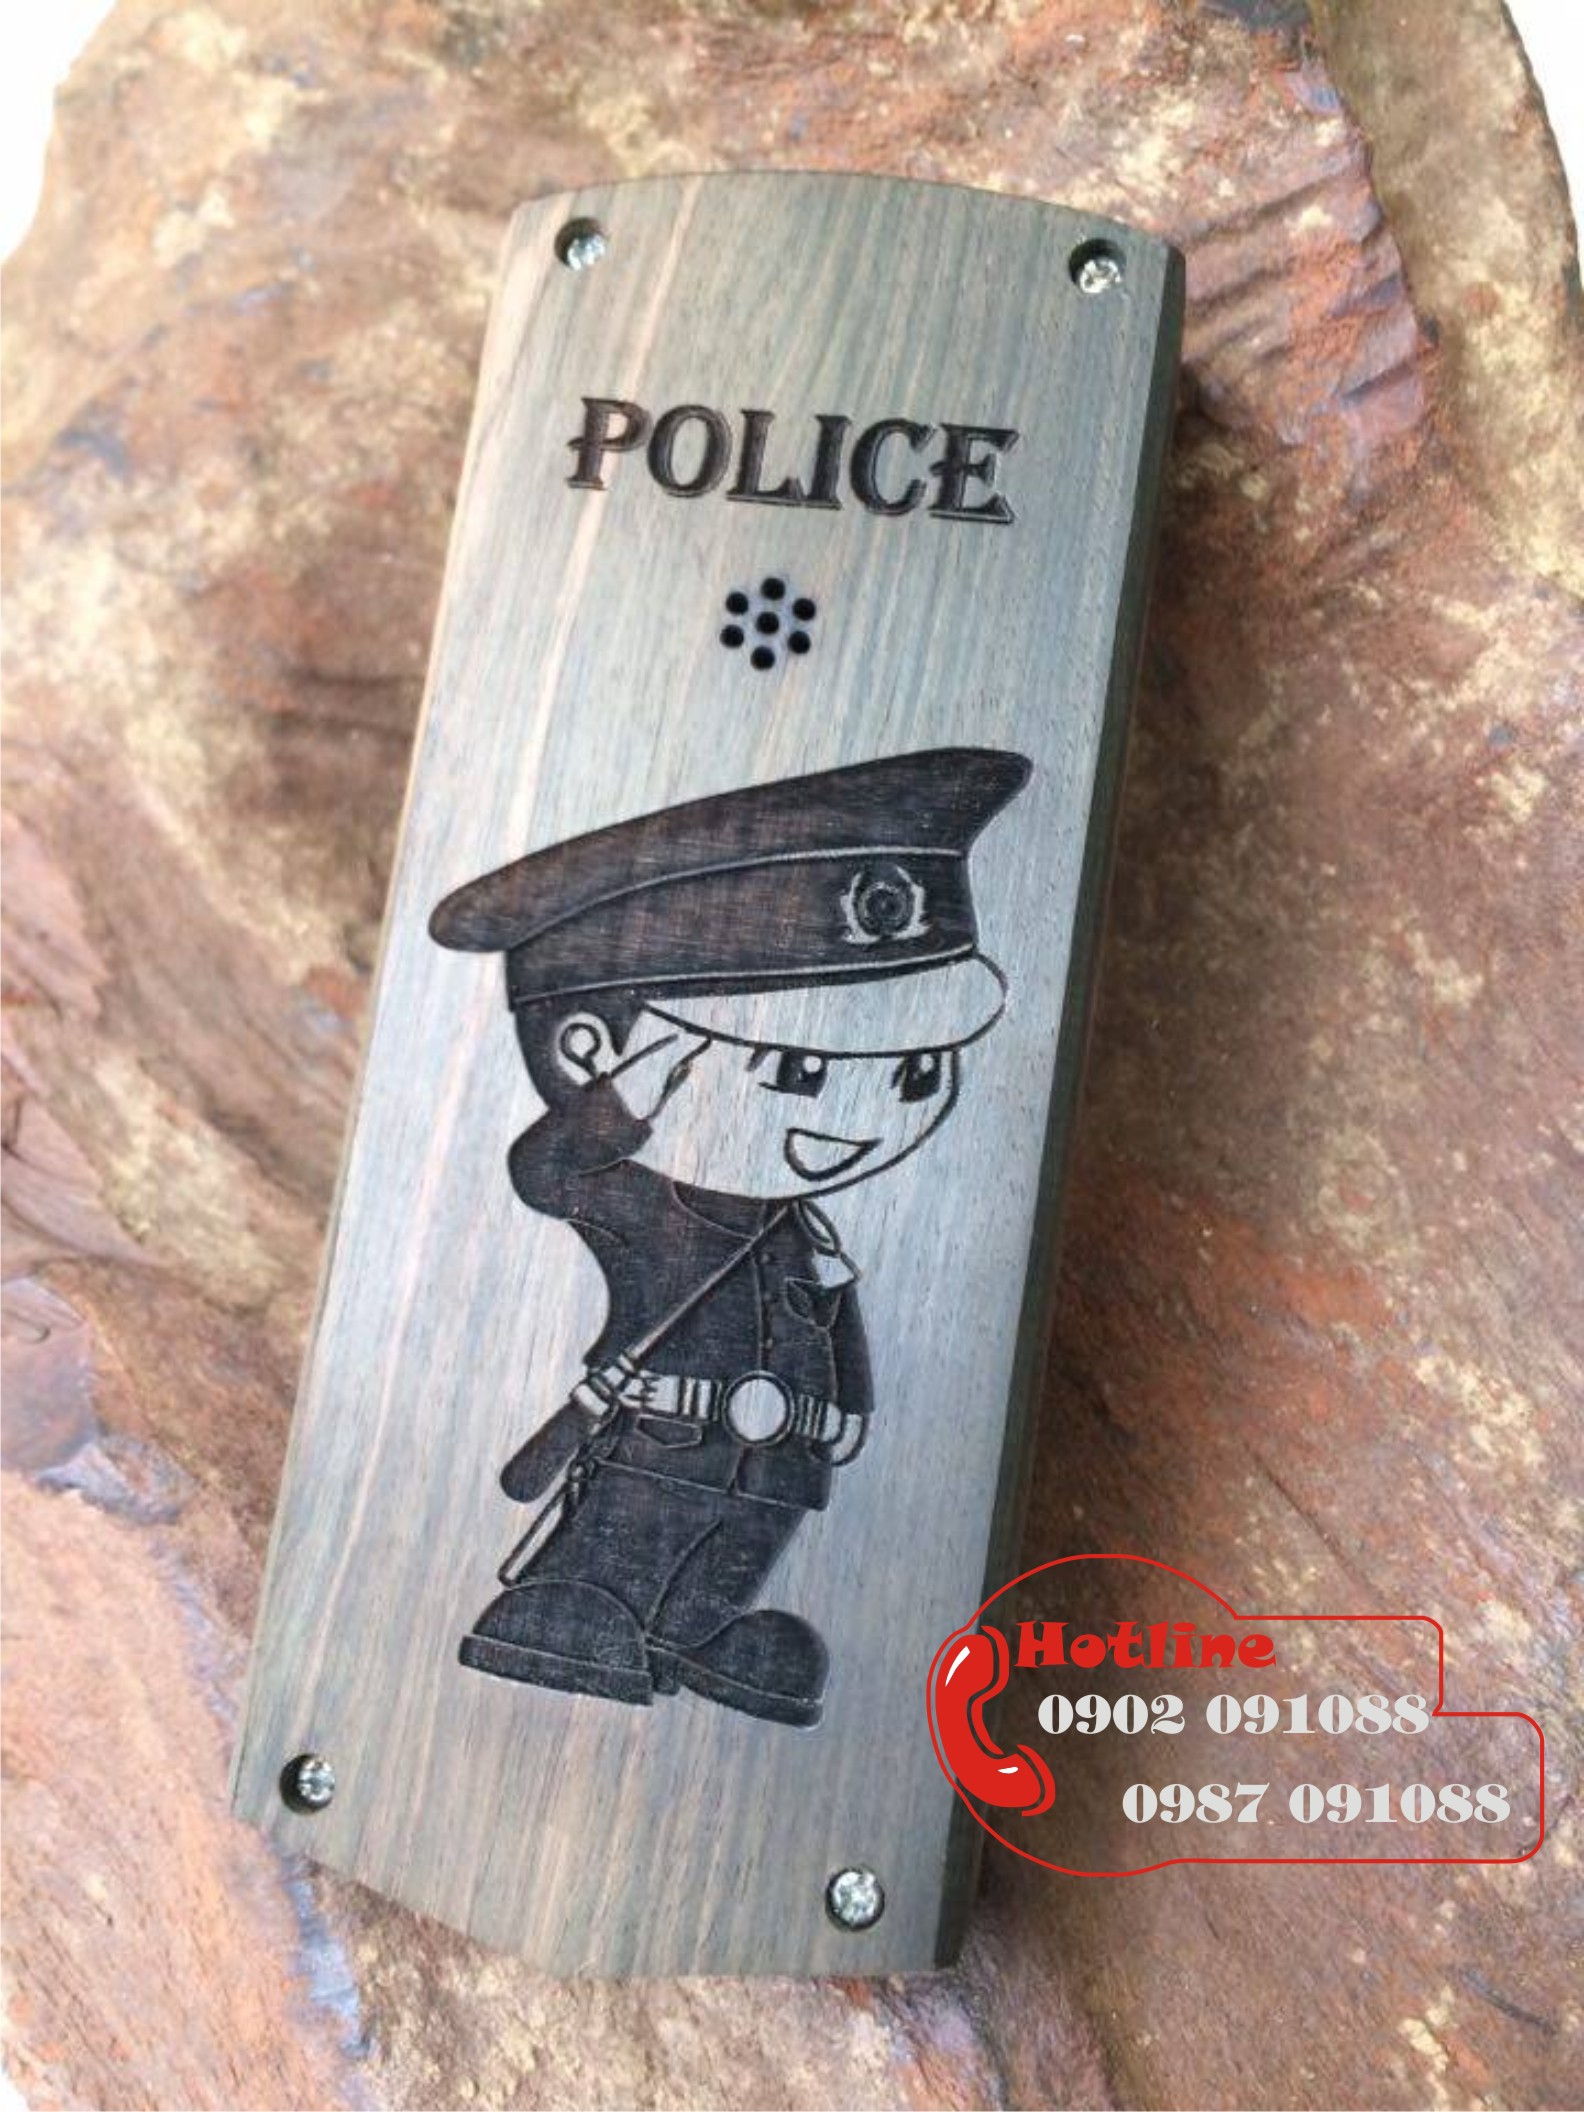 vo-go-dien-thoai-x1-01-police